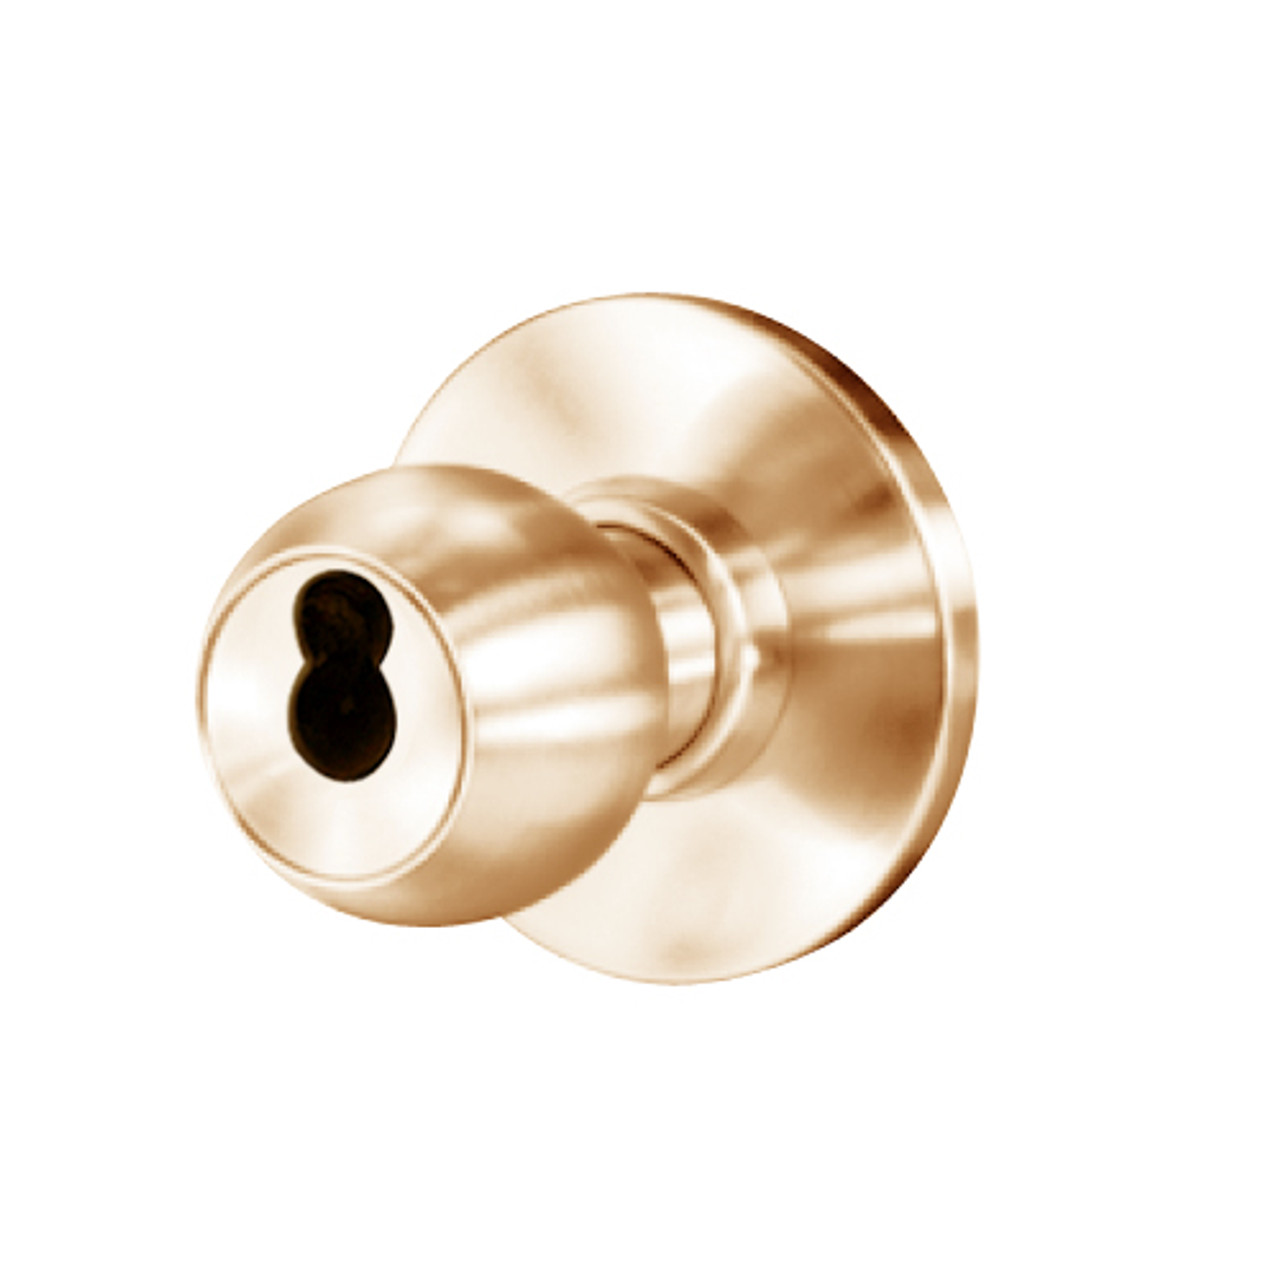 8K47W4ASTK611 Best 8K Series Institutional Heavy Duty Cylindrical Knob Locks with Round Style in Bright Bronze